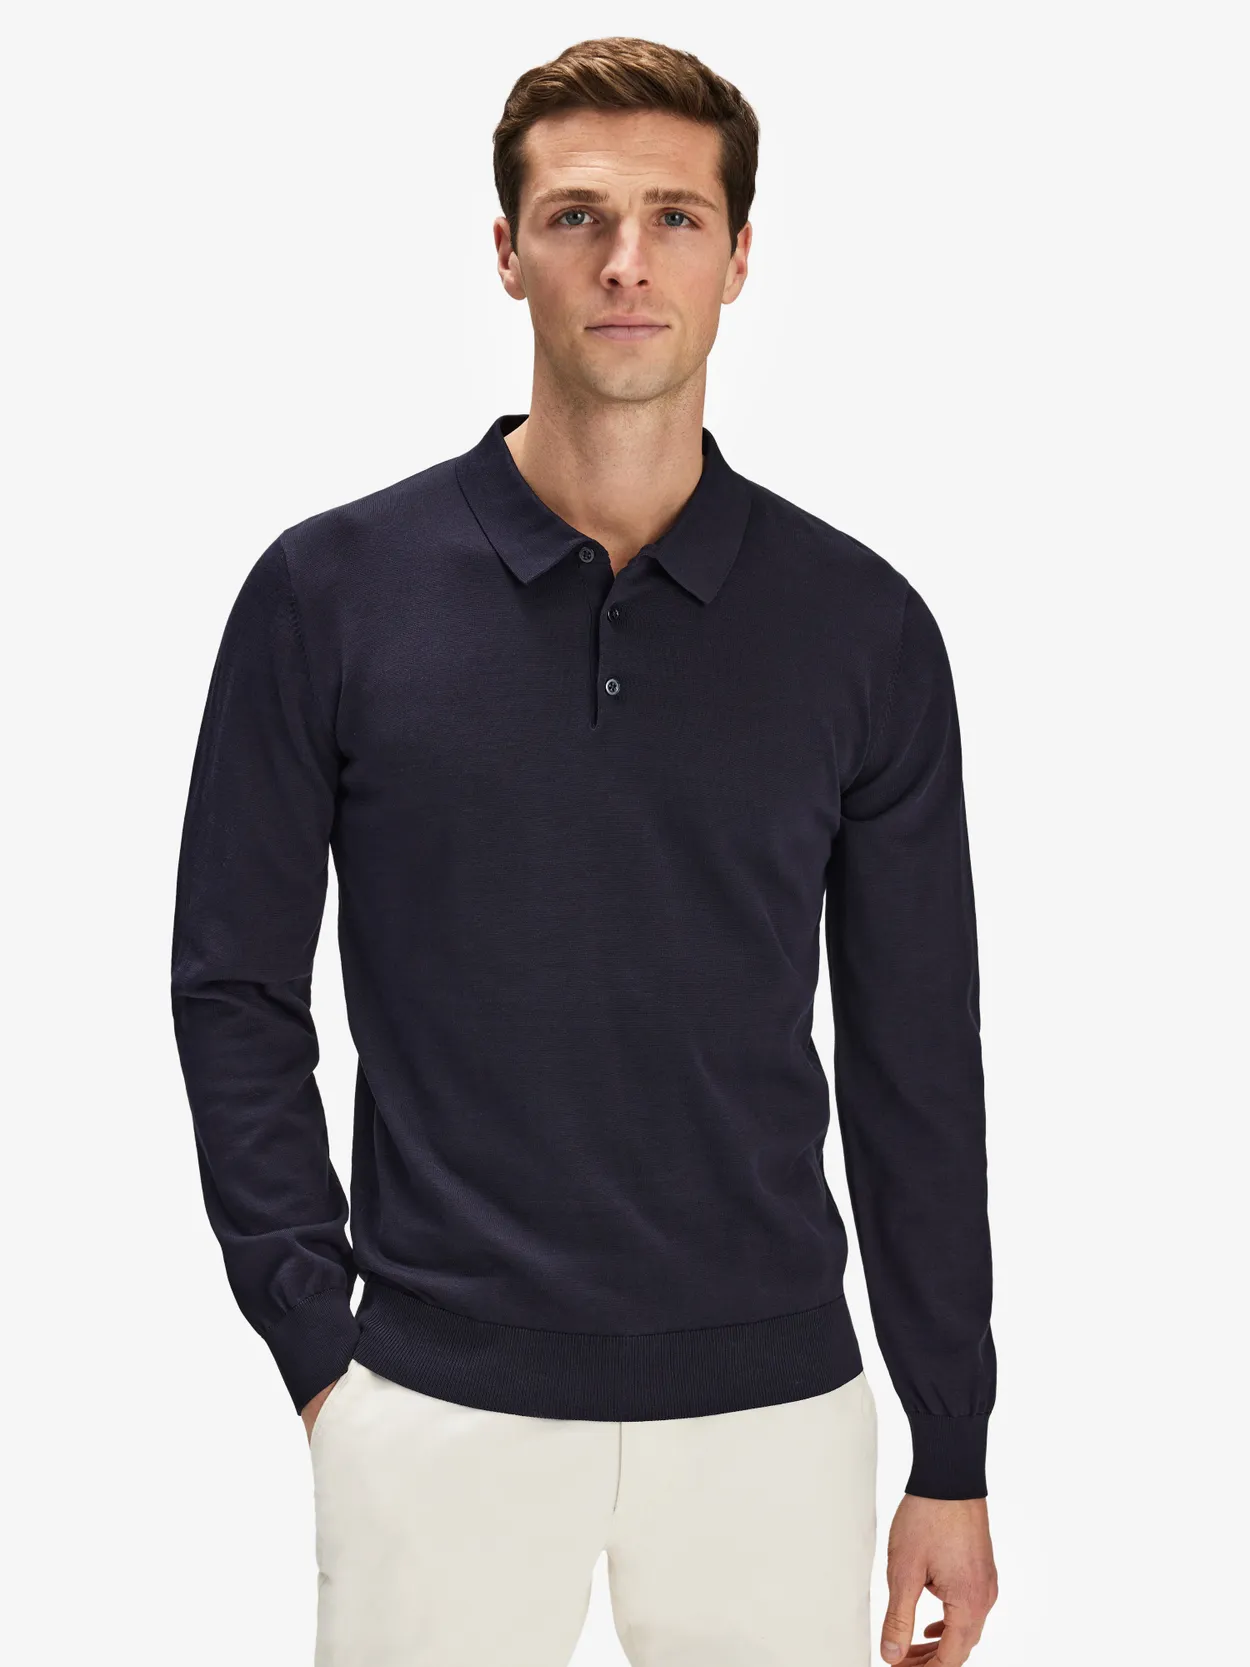 Navy Blue Cotton Silk Polo Sweater